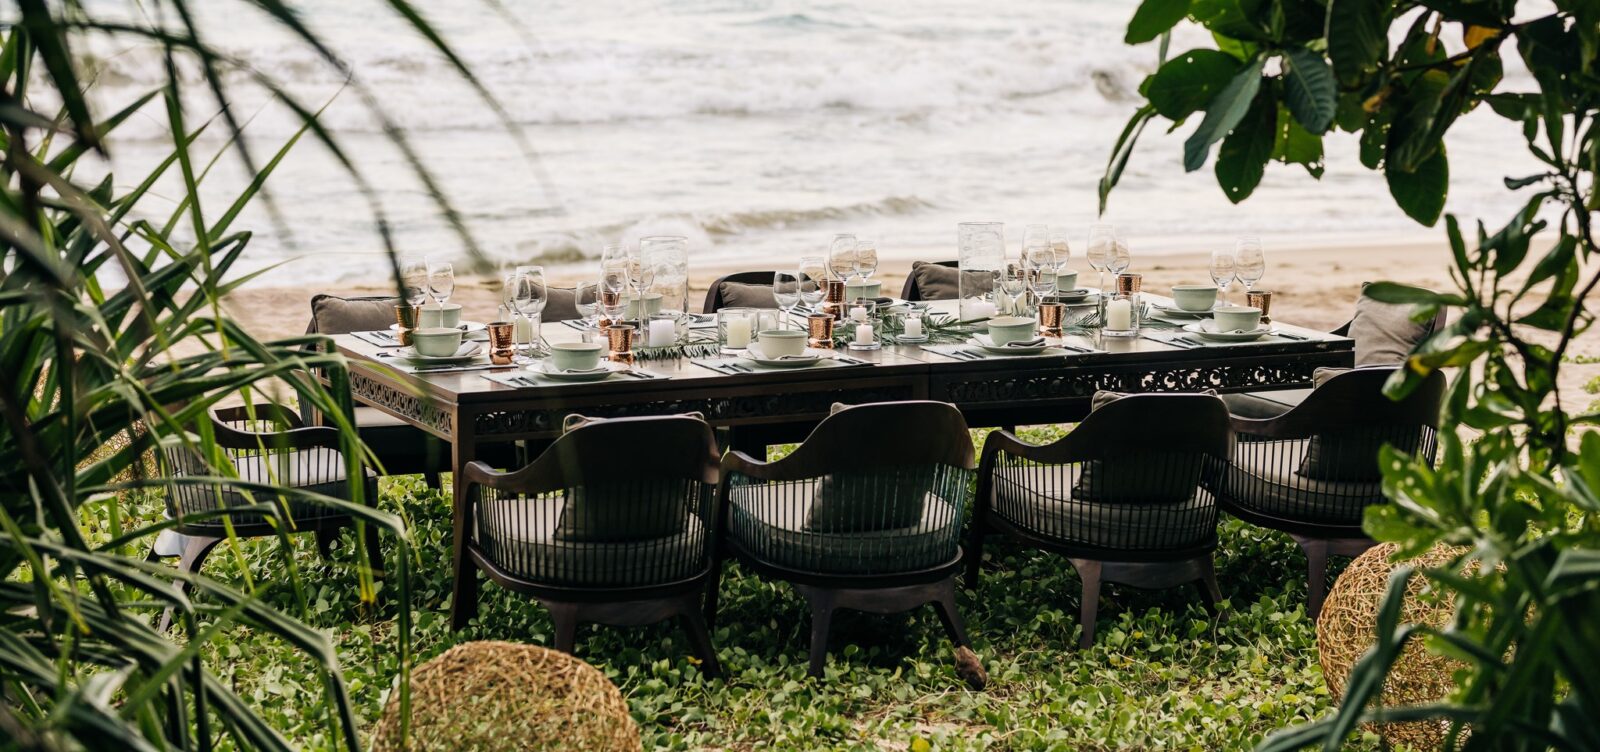 ANI Sri Lanka – Dining Beach Dinner